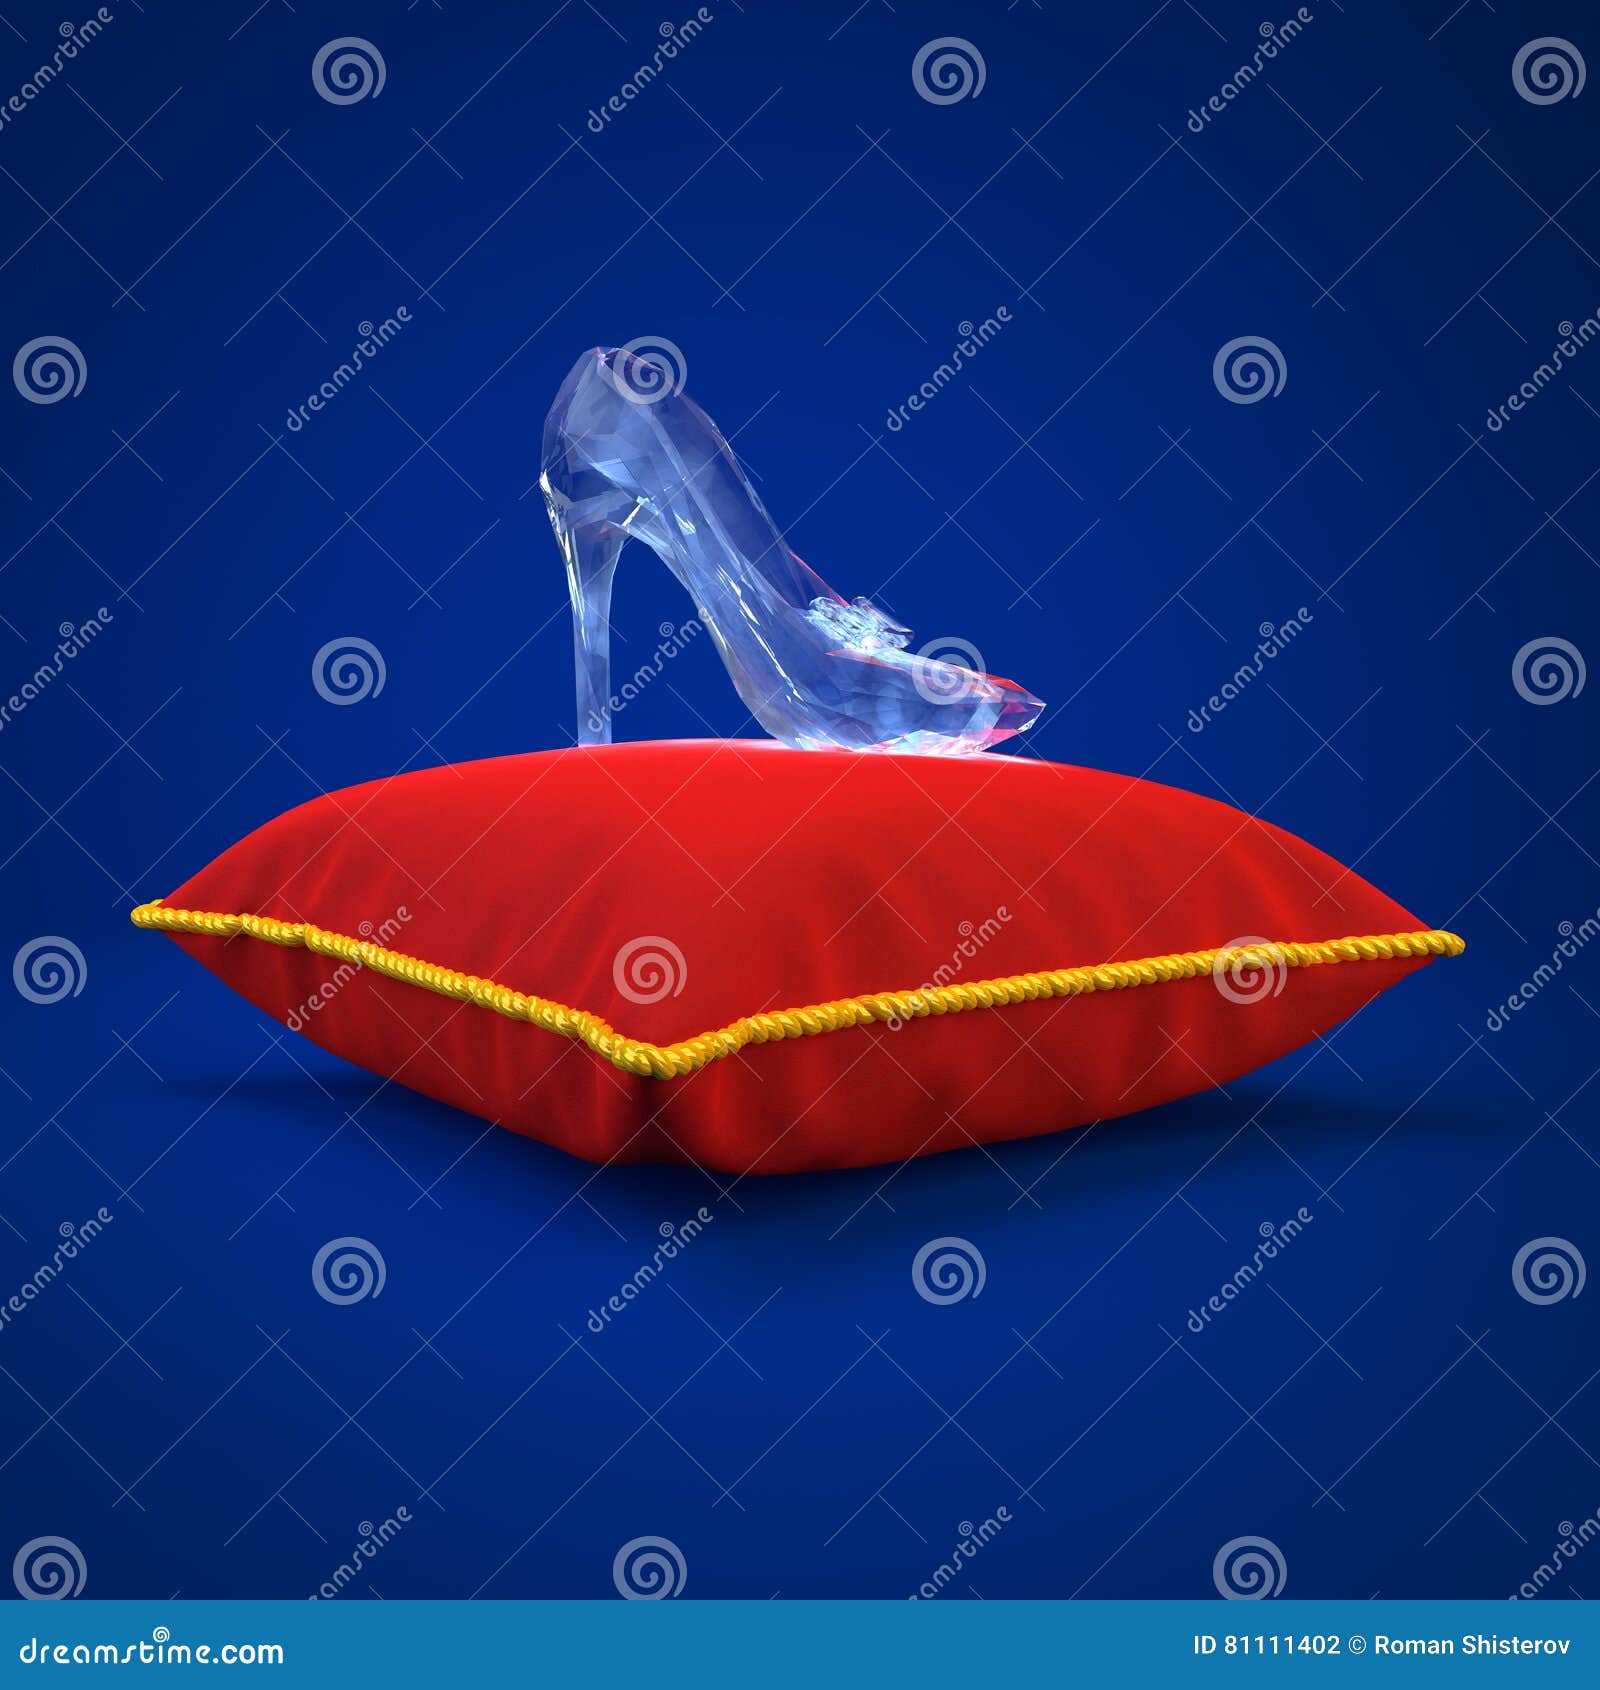 Shoe Designers Sketch Cinderella?s Iconic Glass Slipper | Glamour